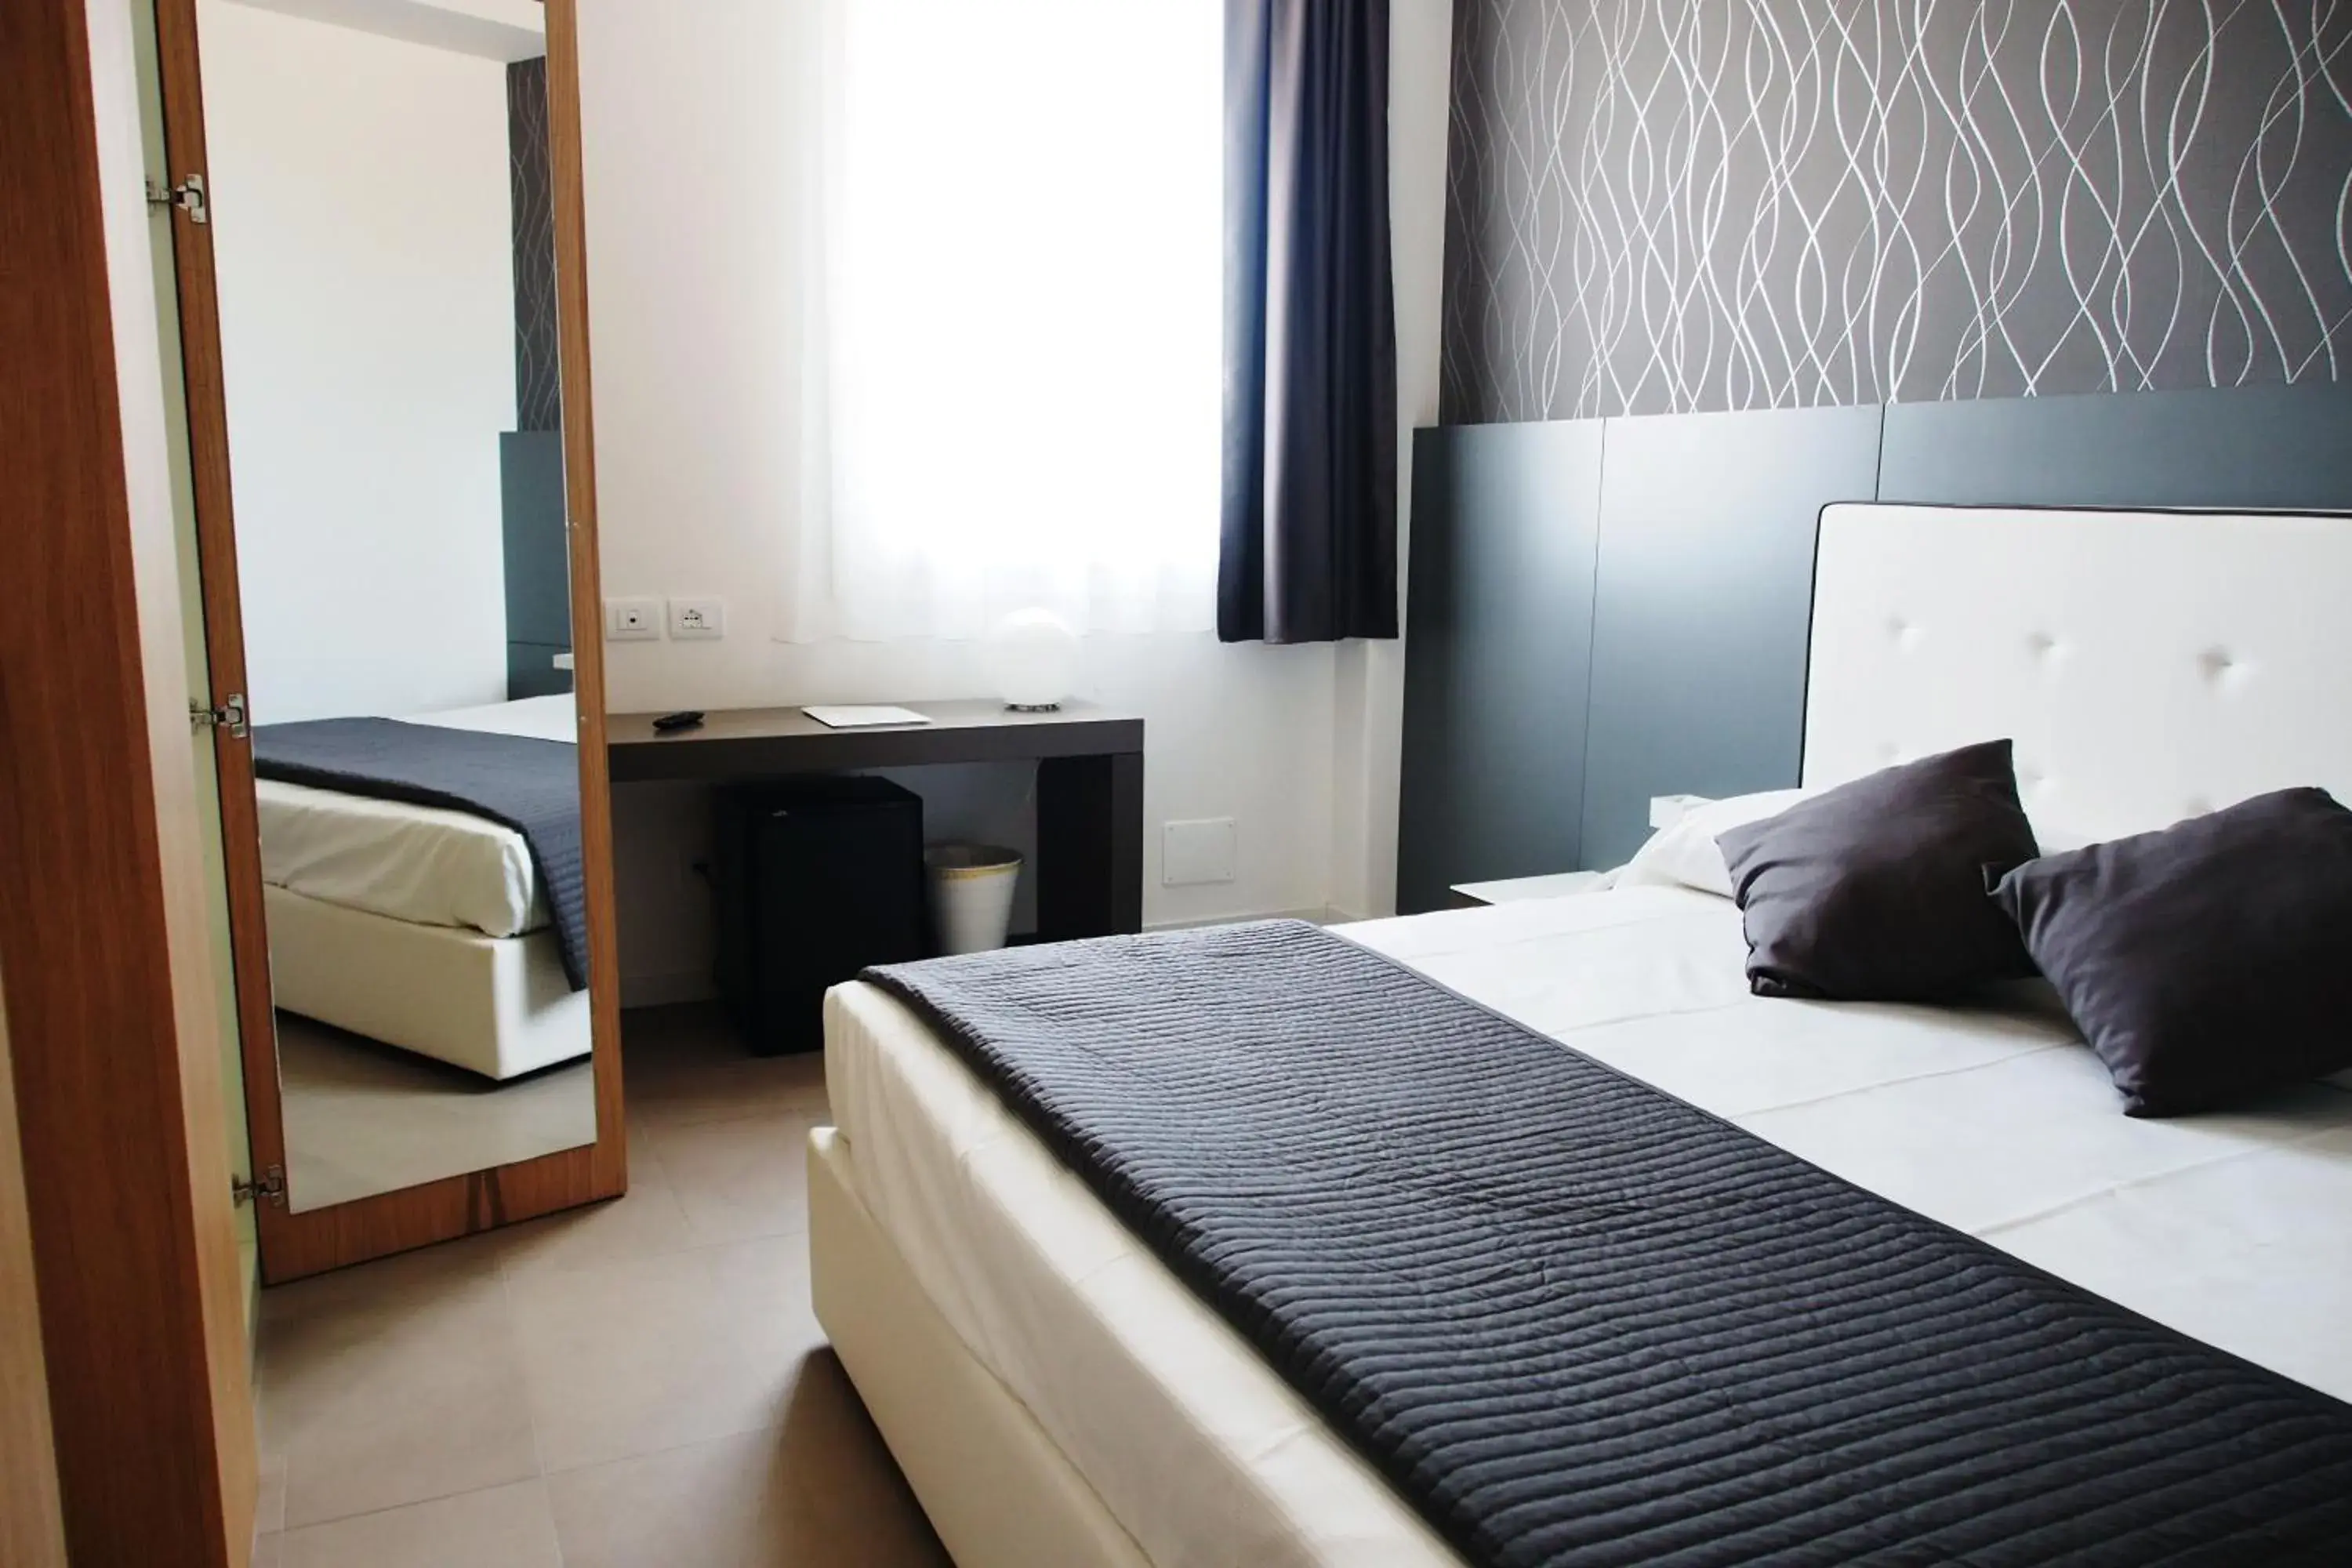 Bed, Room Photo in Sicilia Hotel Spa